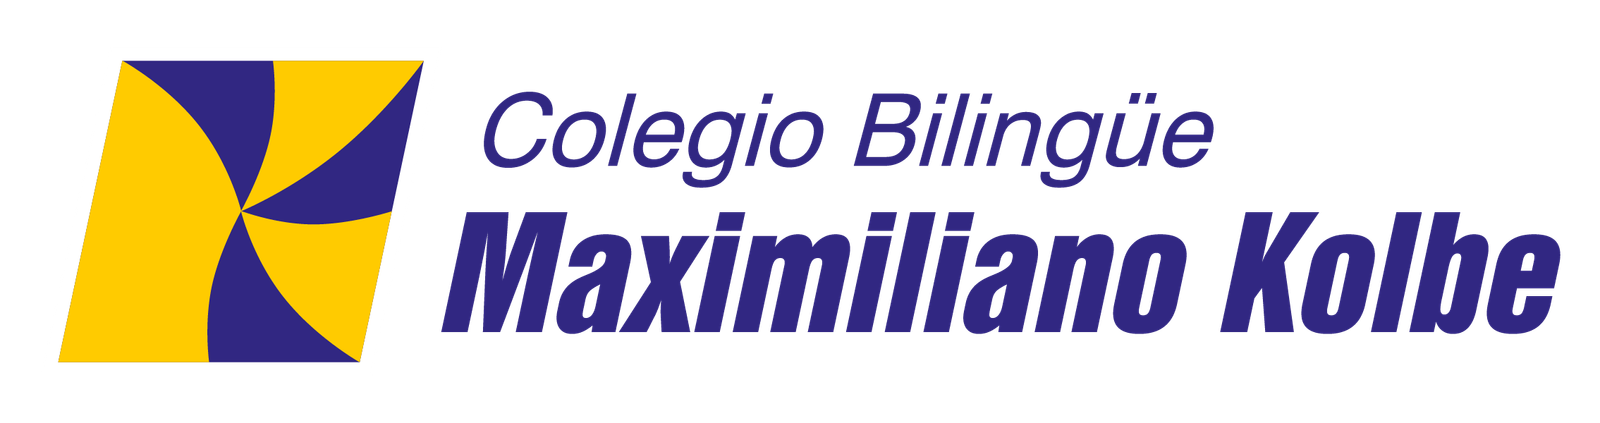 Colegio Bilingüe Maximiliano kolbe